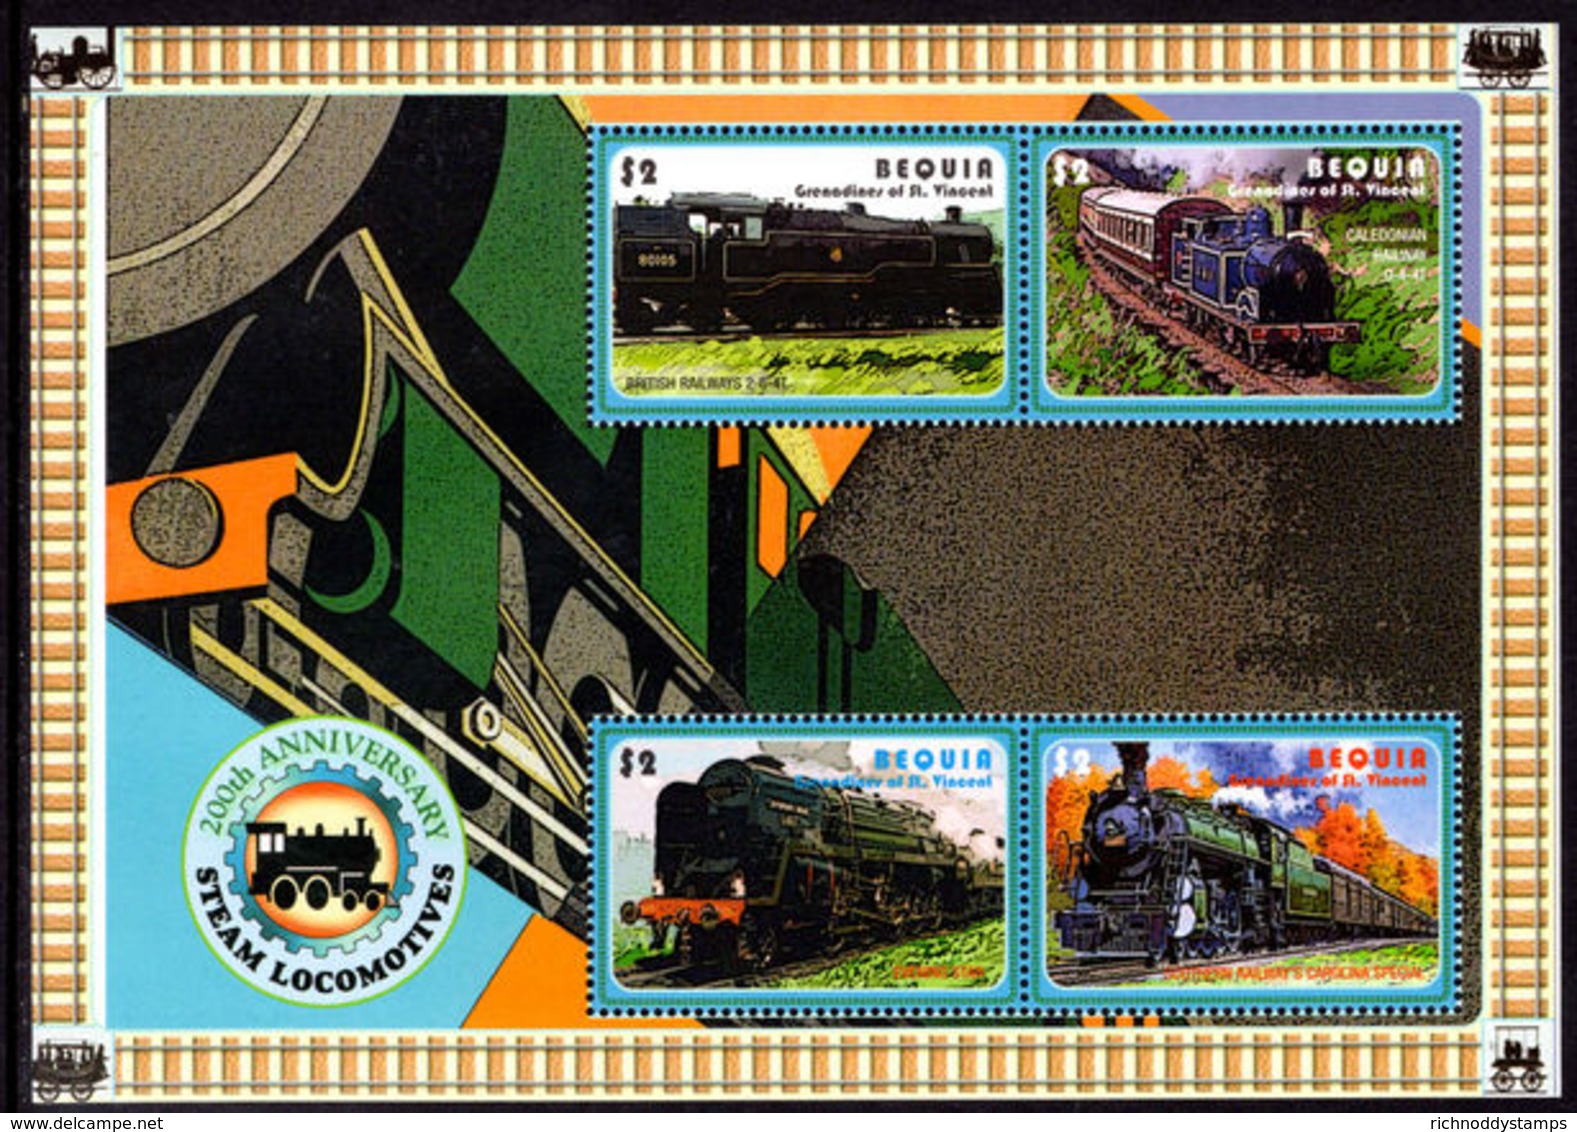 Bequia 2004 Trains British Railways Souvenir Sheet Unmounted Mint. - St.Vincent & Grenadines